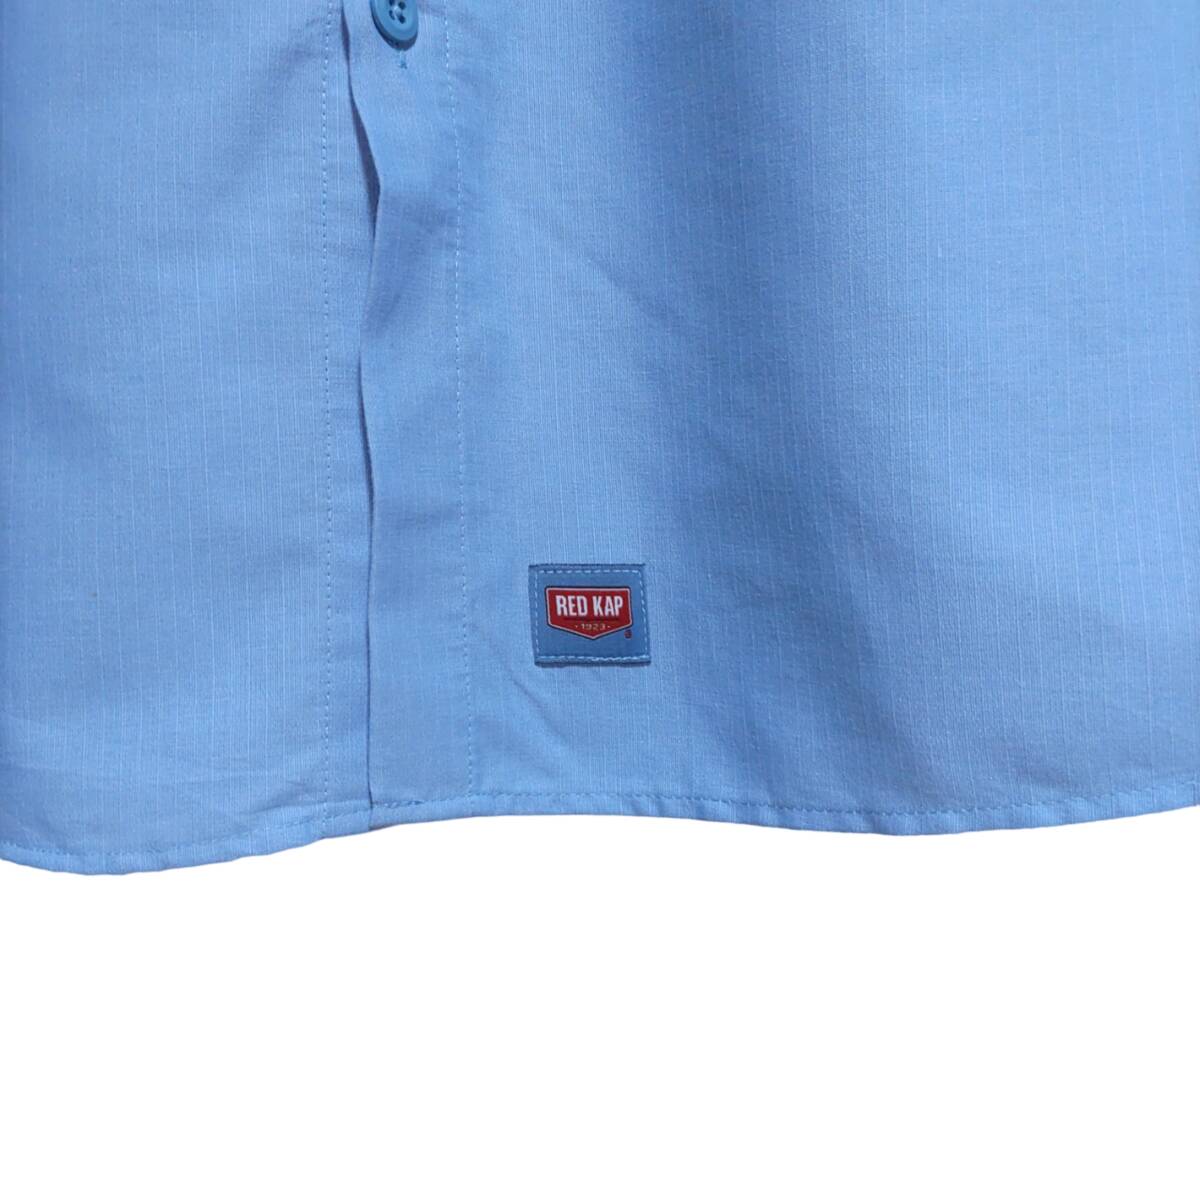 RED KAP 半袖ワークシャツ size L ライトブルー 裾タグ ゆうパケットポスト可 胸 ワッペン AIRESERV USA国旗 古着 洗濯 プレス済 e77_画像5